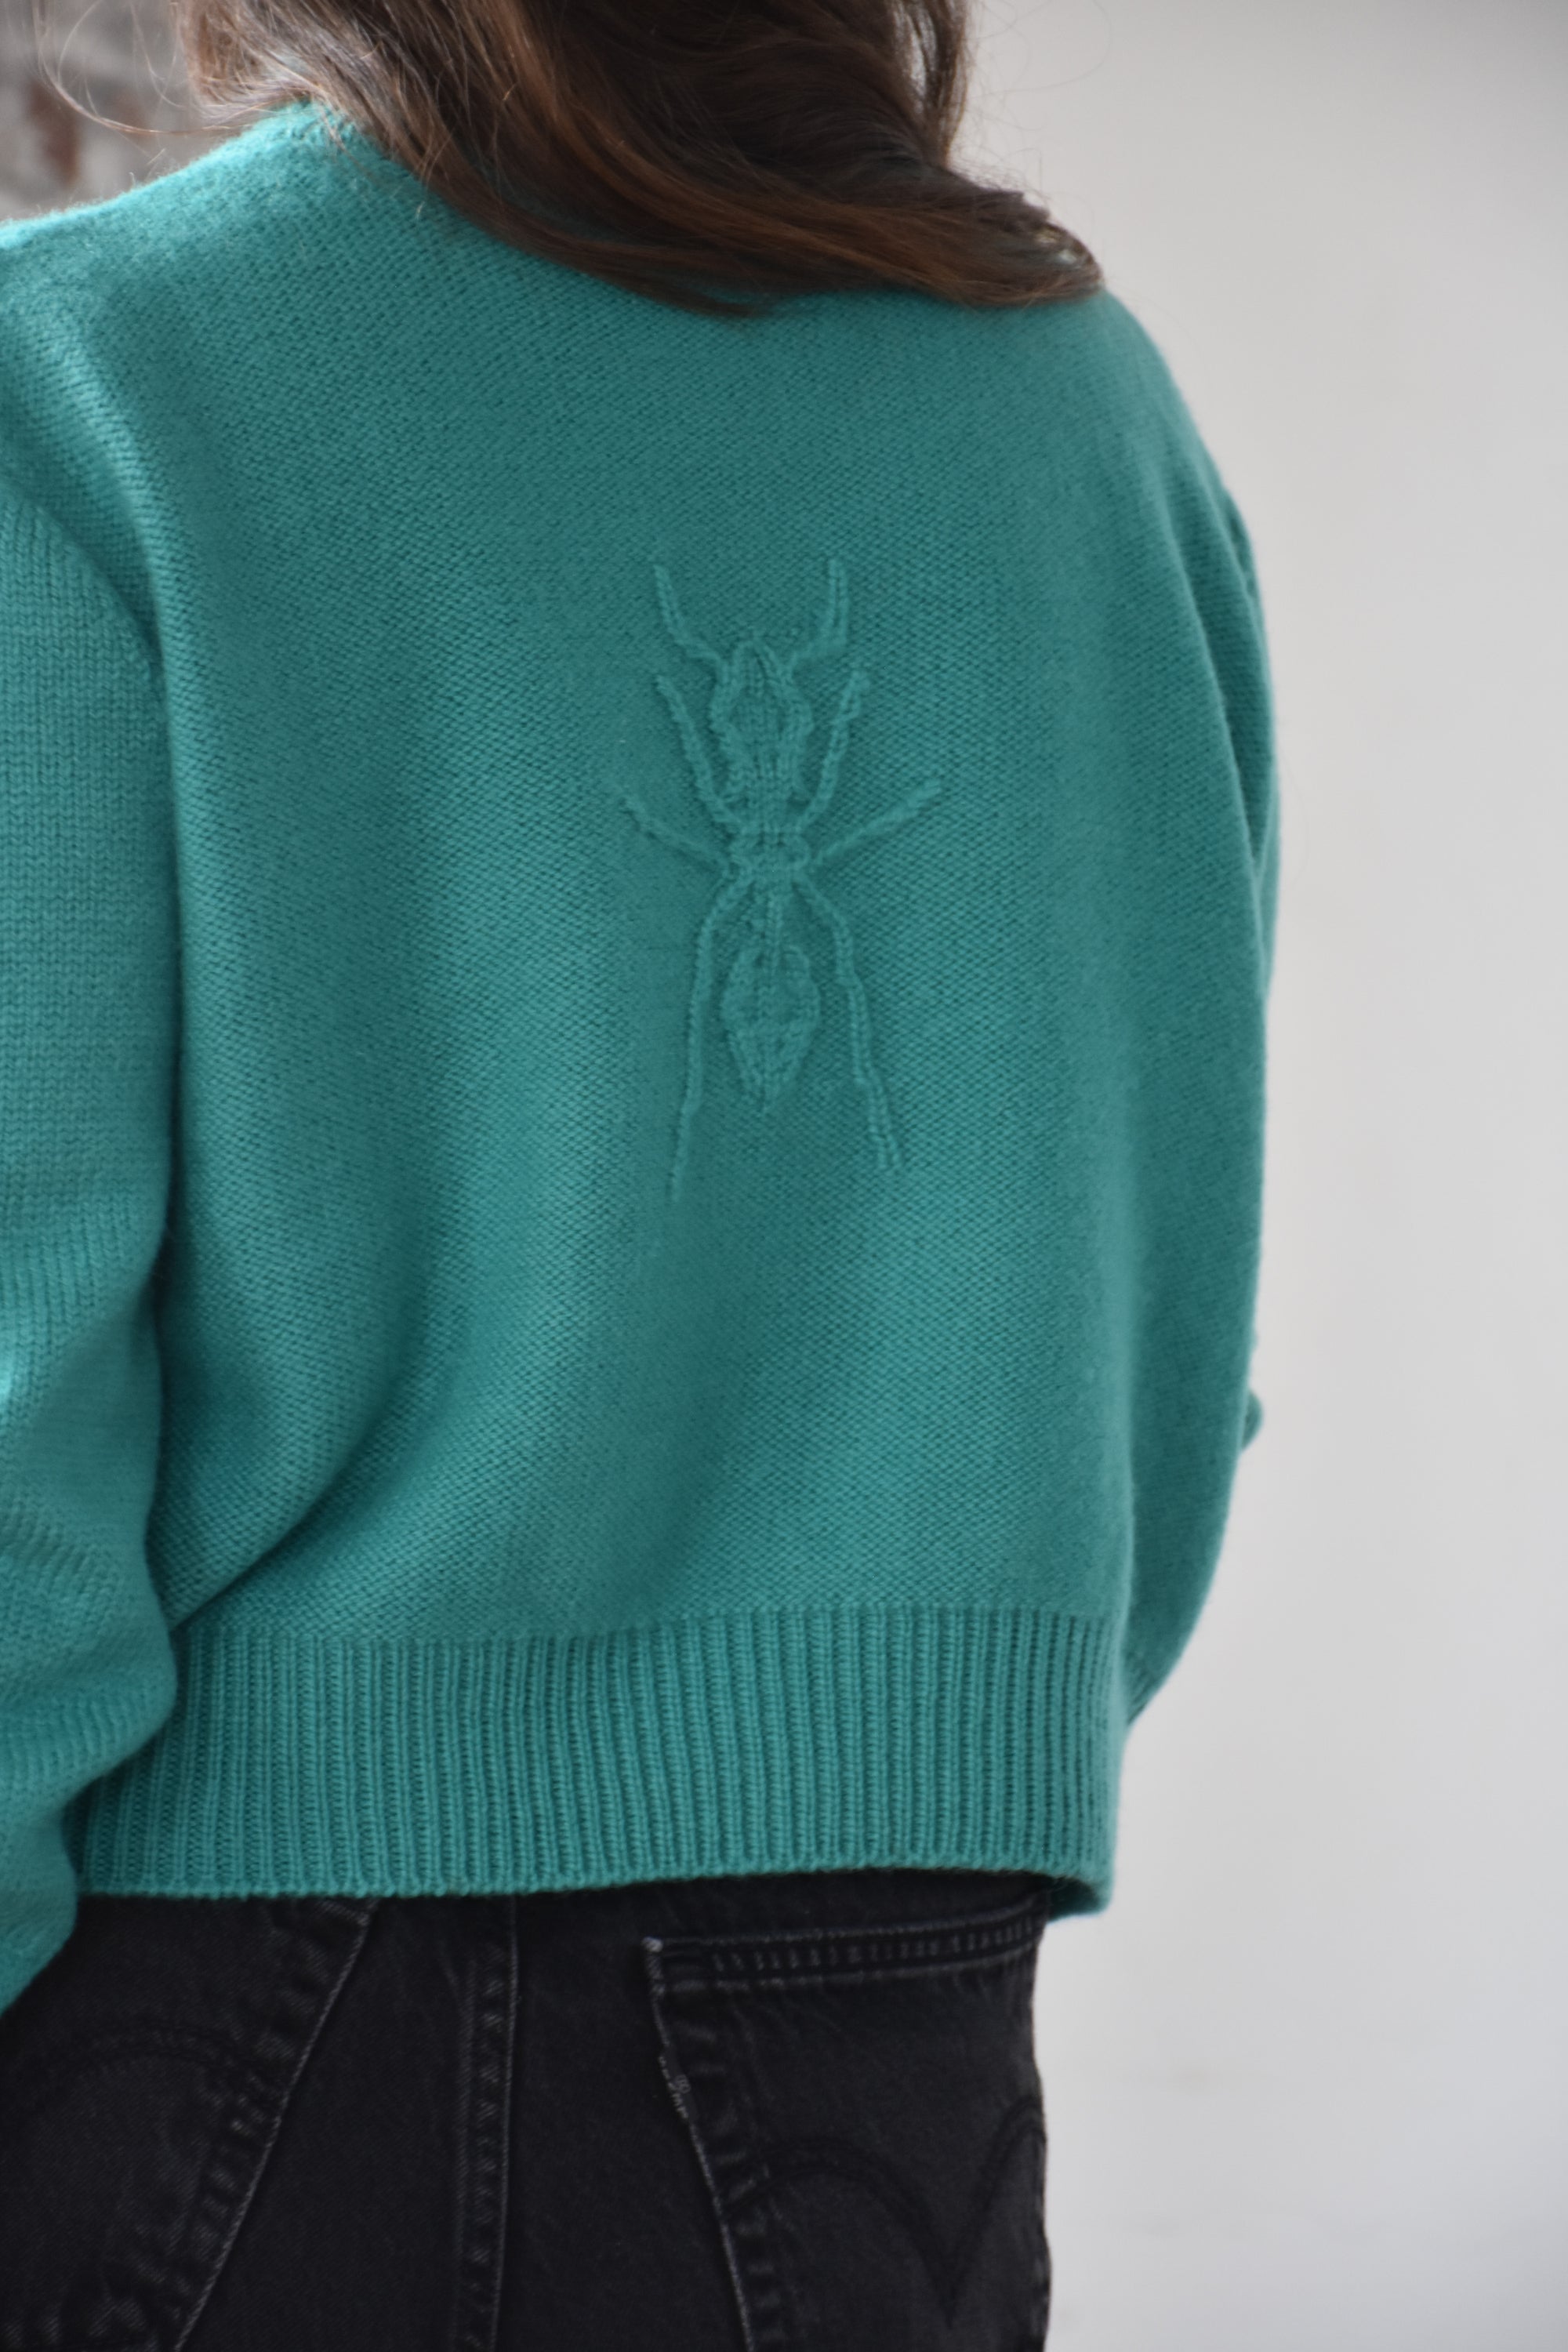 ANT emblem sweater